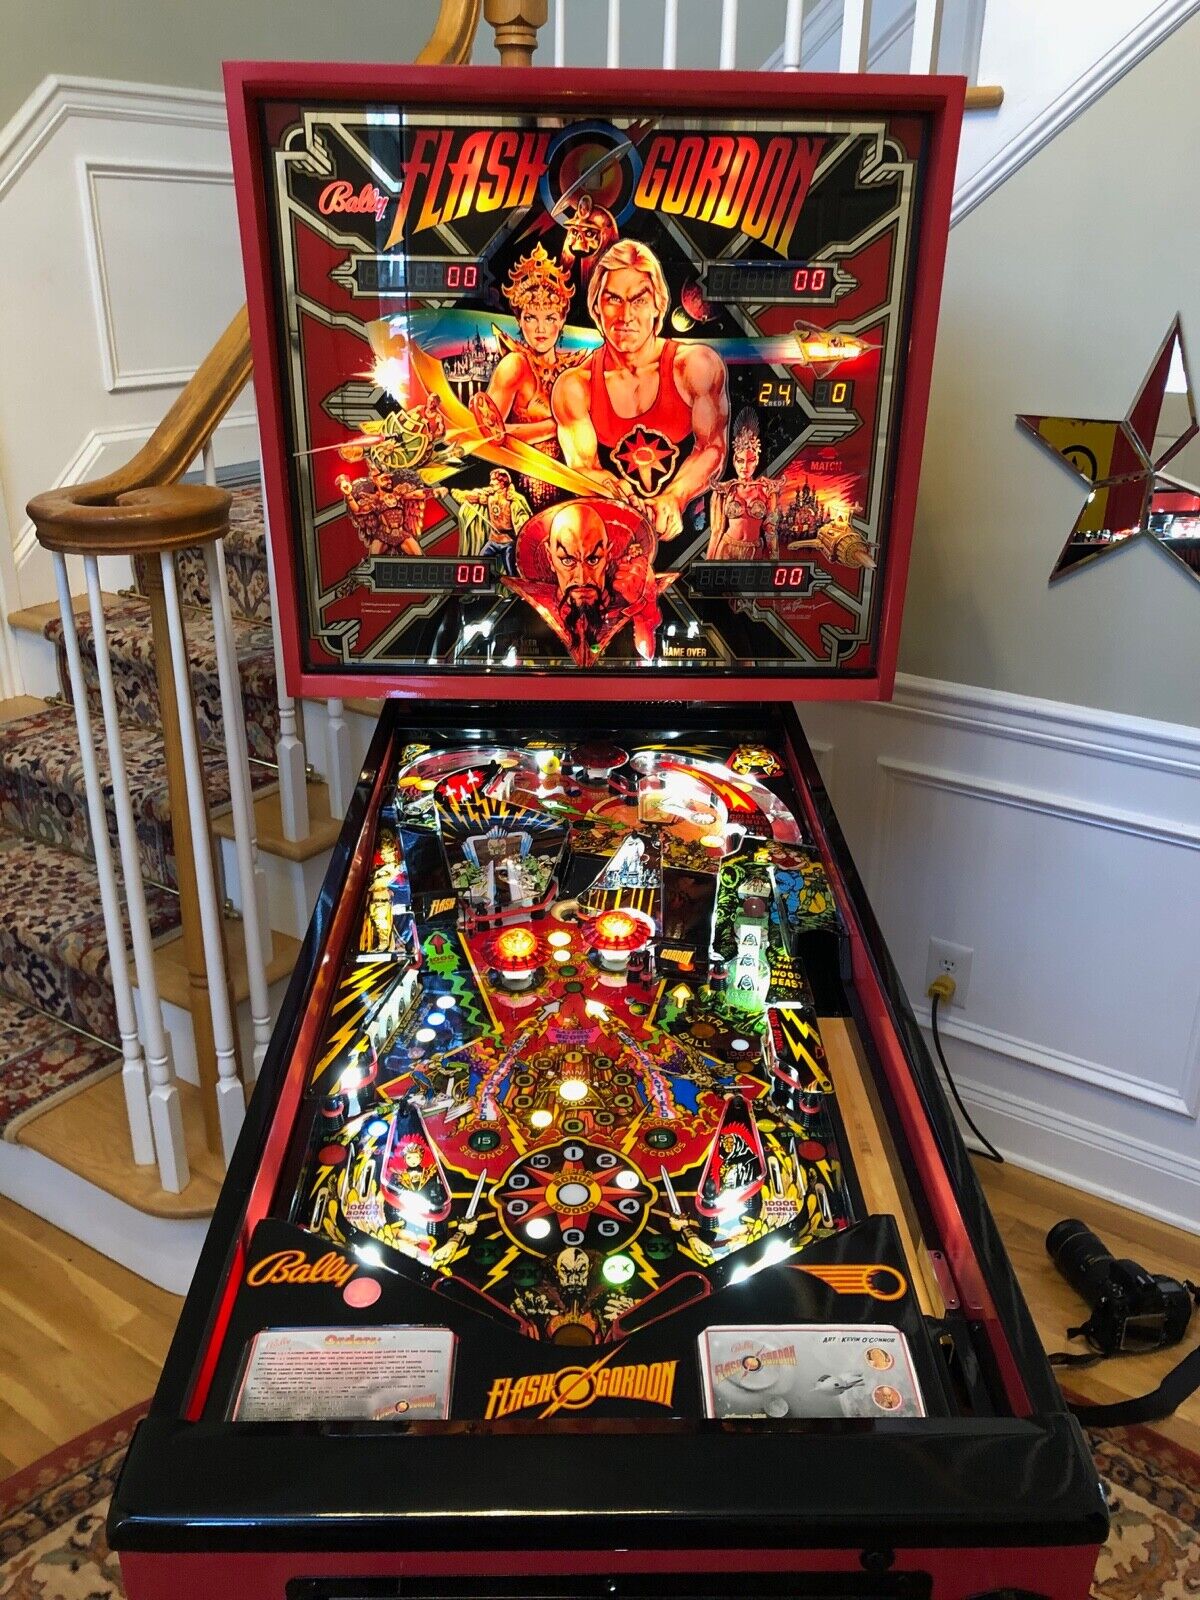 Senaat Machtig pijp Beautifully restored! Flash Gordon 1981 Bally pinball machine! New  playfield! | eBay